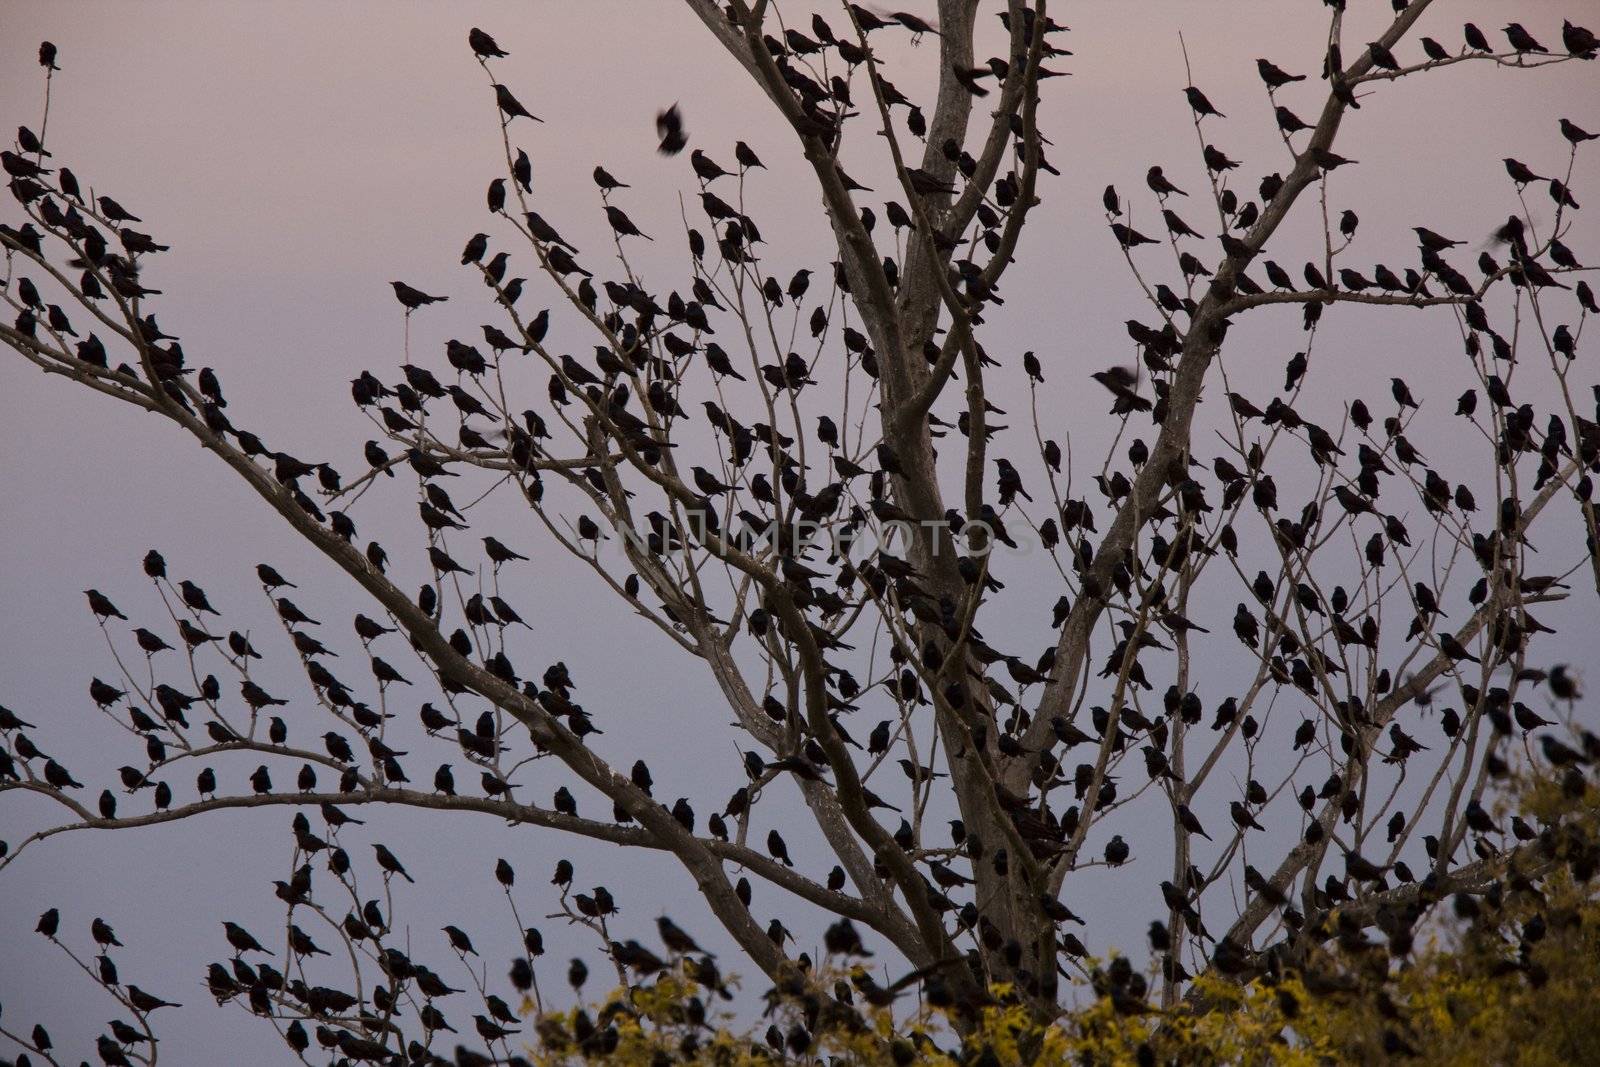 Blackbirds in tree by pictureguy